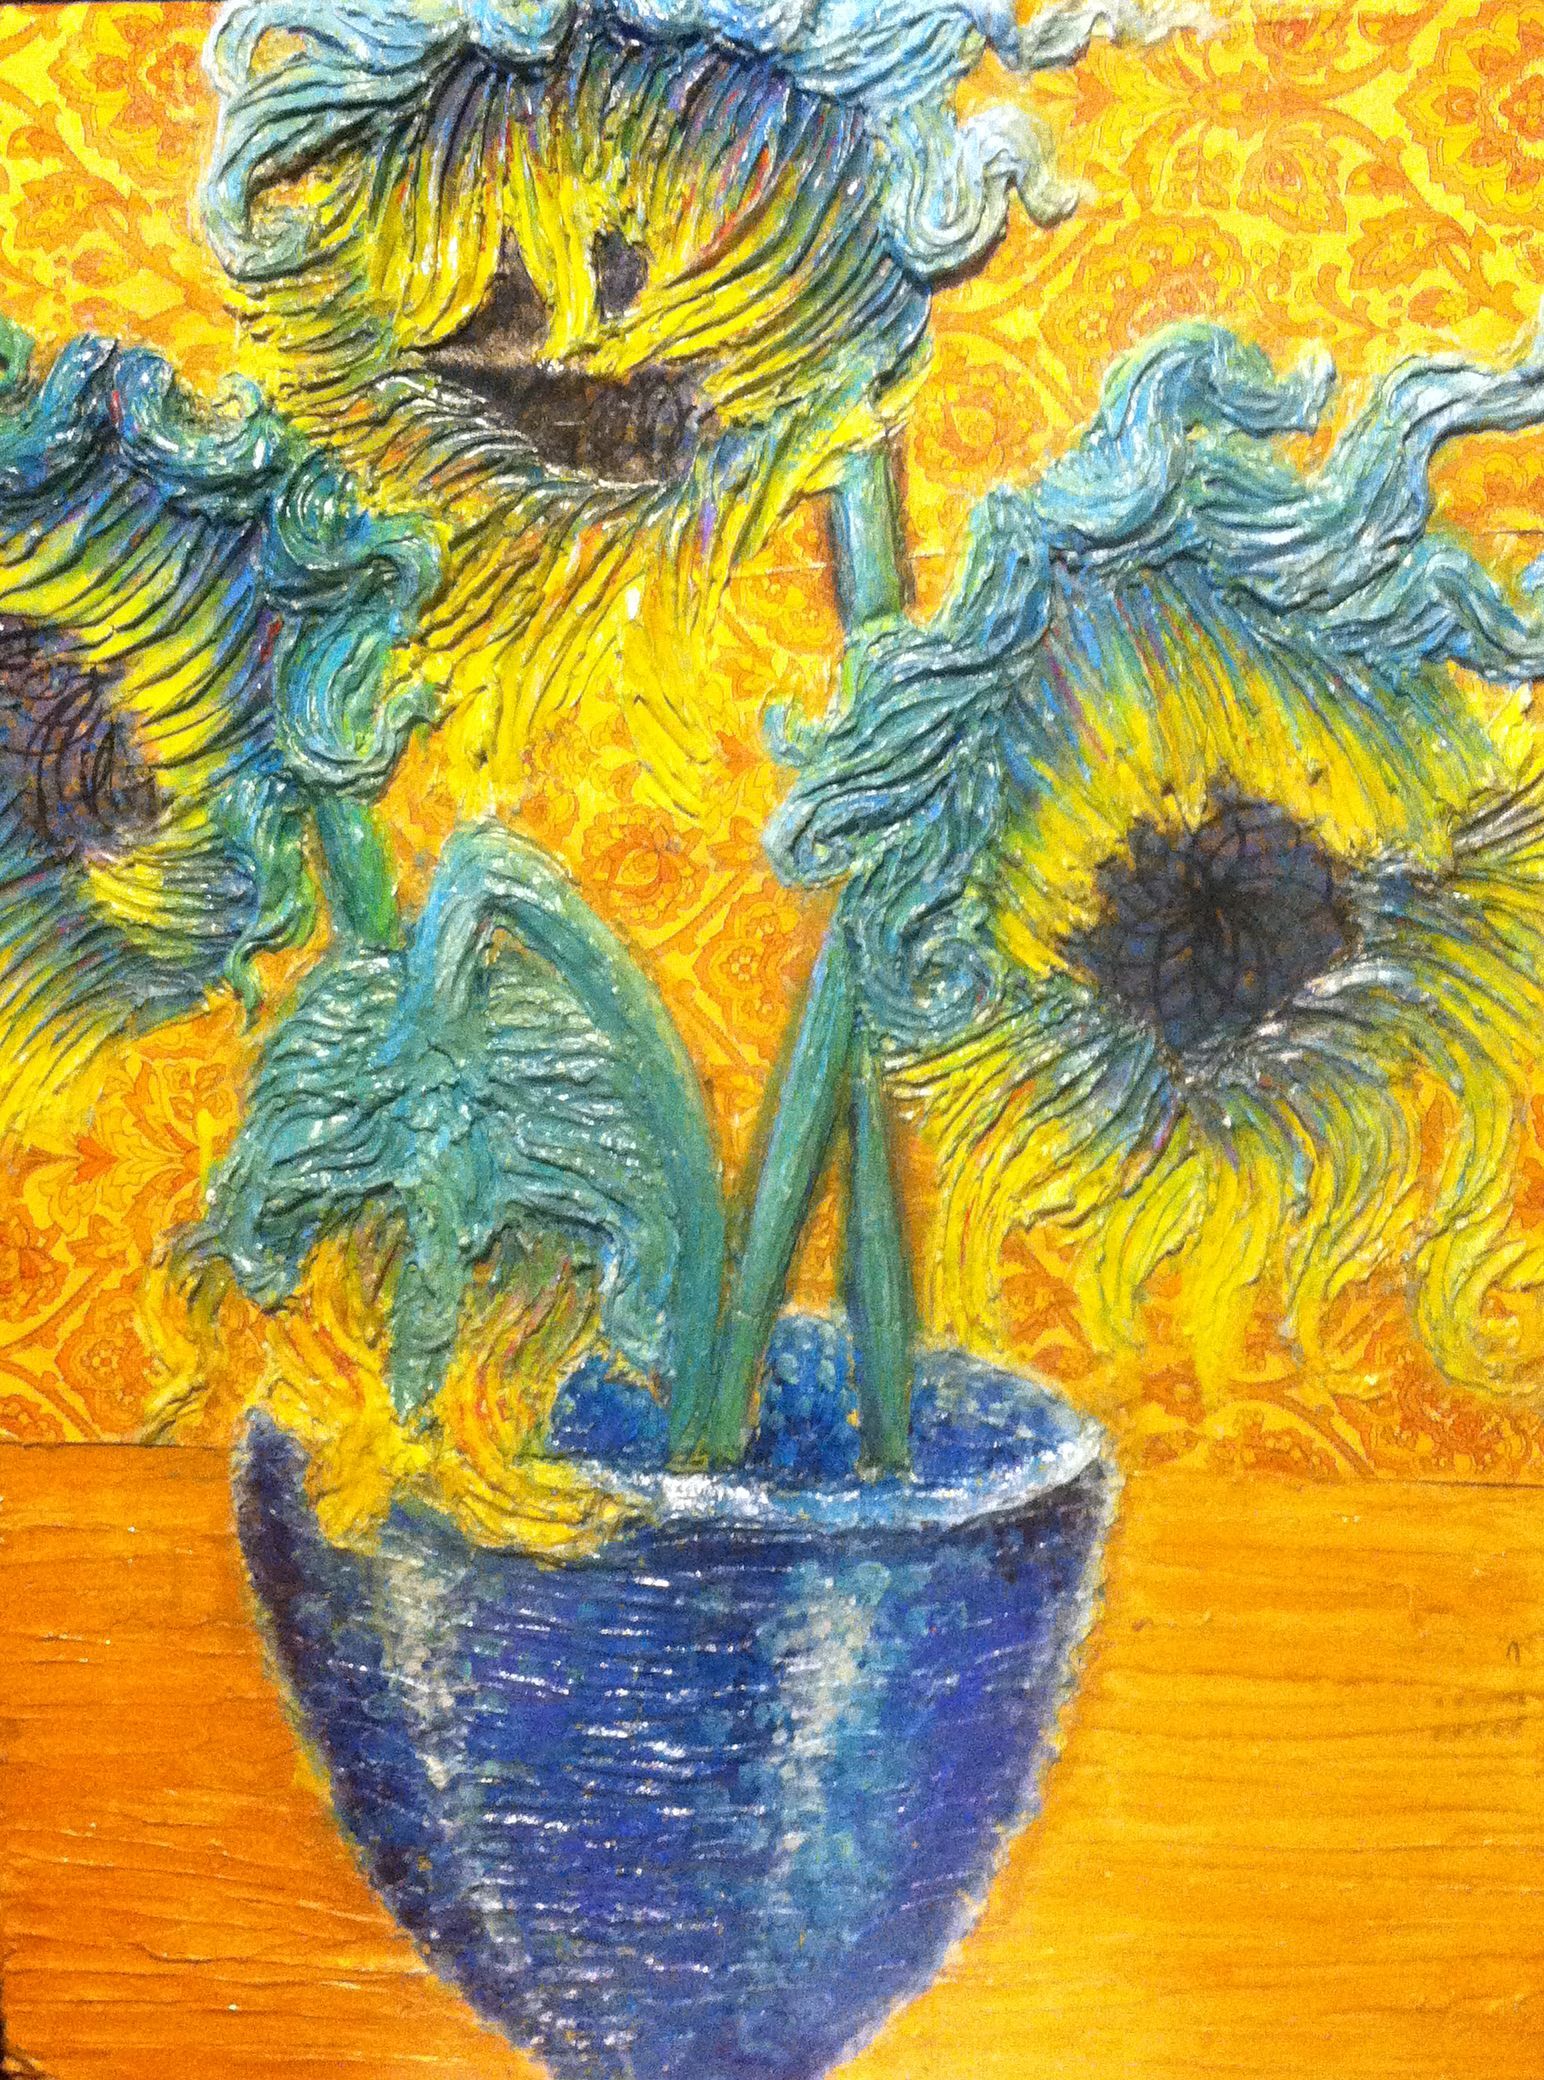 Vincent van Gogh image sunflowers HD wallpaper and background. Sunflower wallpaper, Van gogh, Van gogh sunflowers